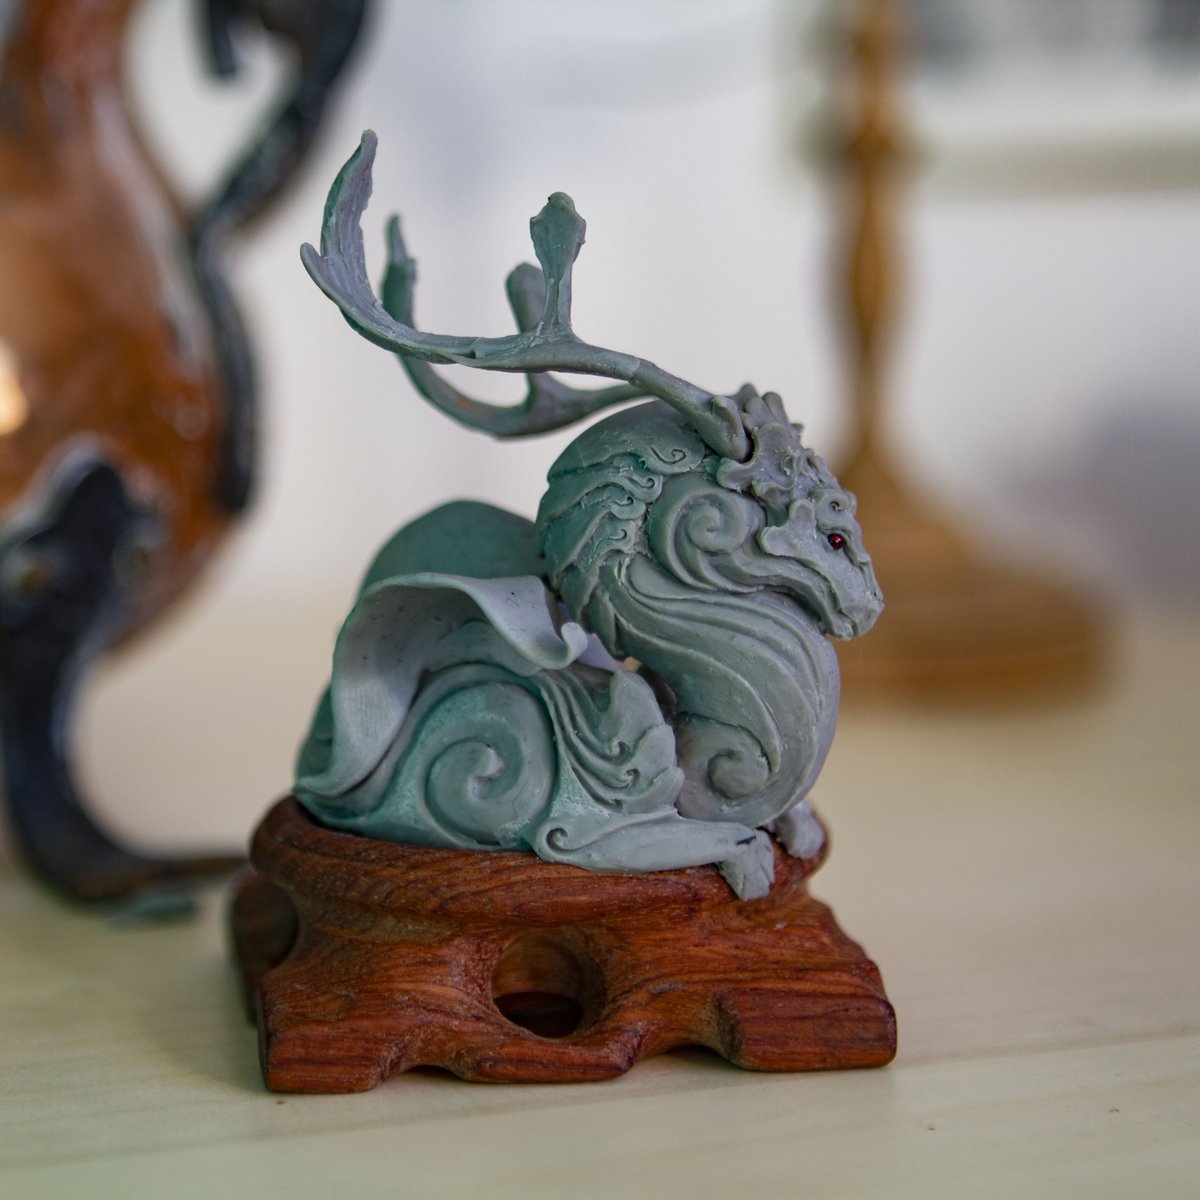 WIP

#dragon #dragonlovers #handmade #sculpture #workinprogress #polymerclay #fantasycreature #creatureart #conceptart